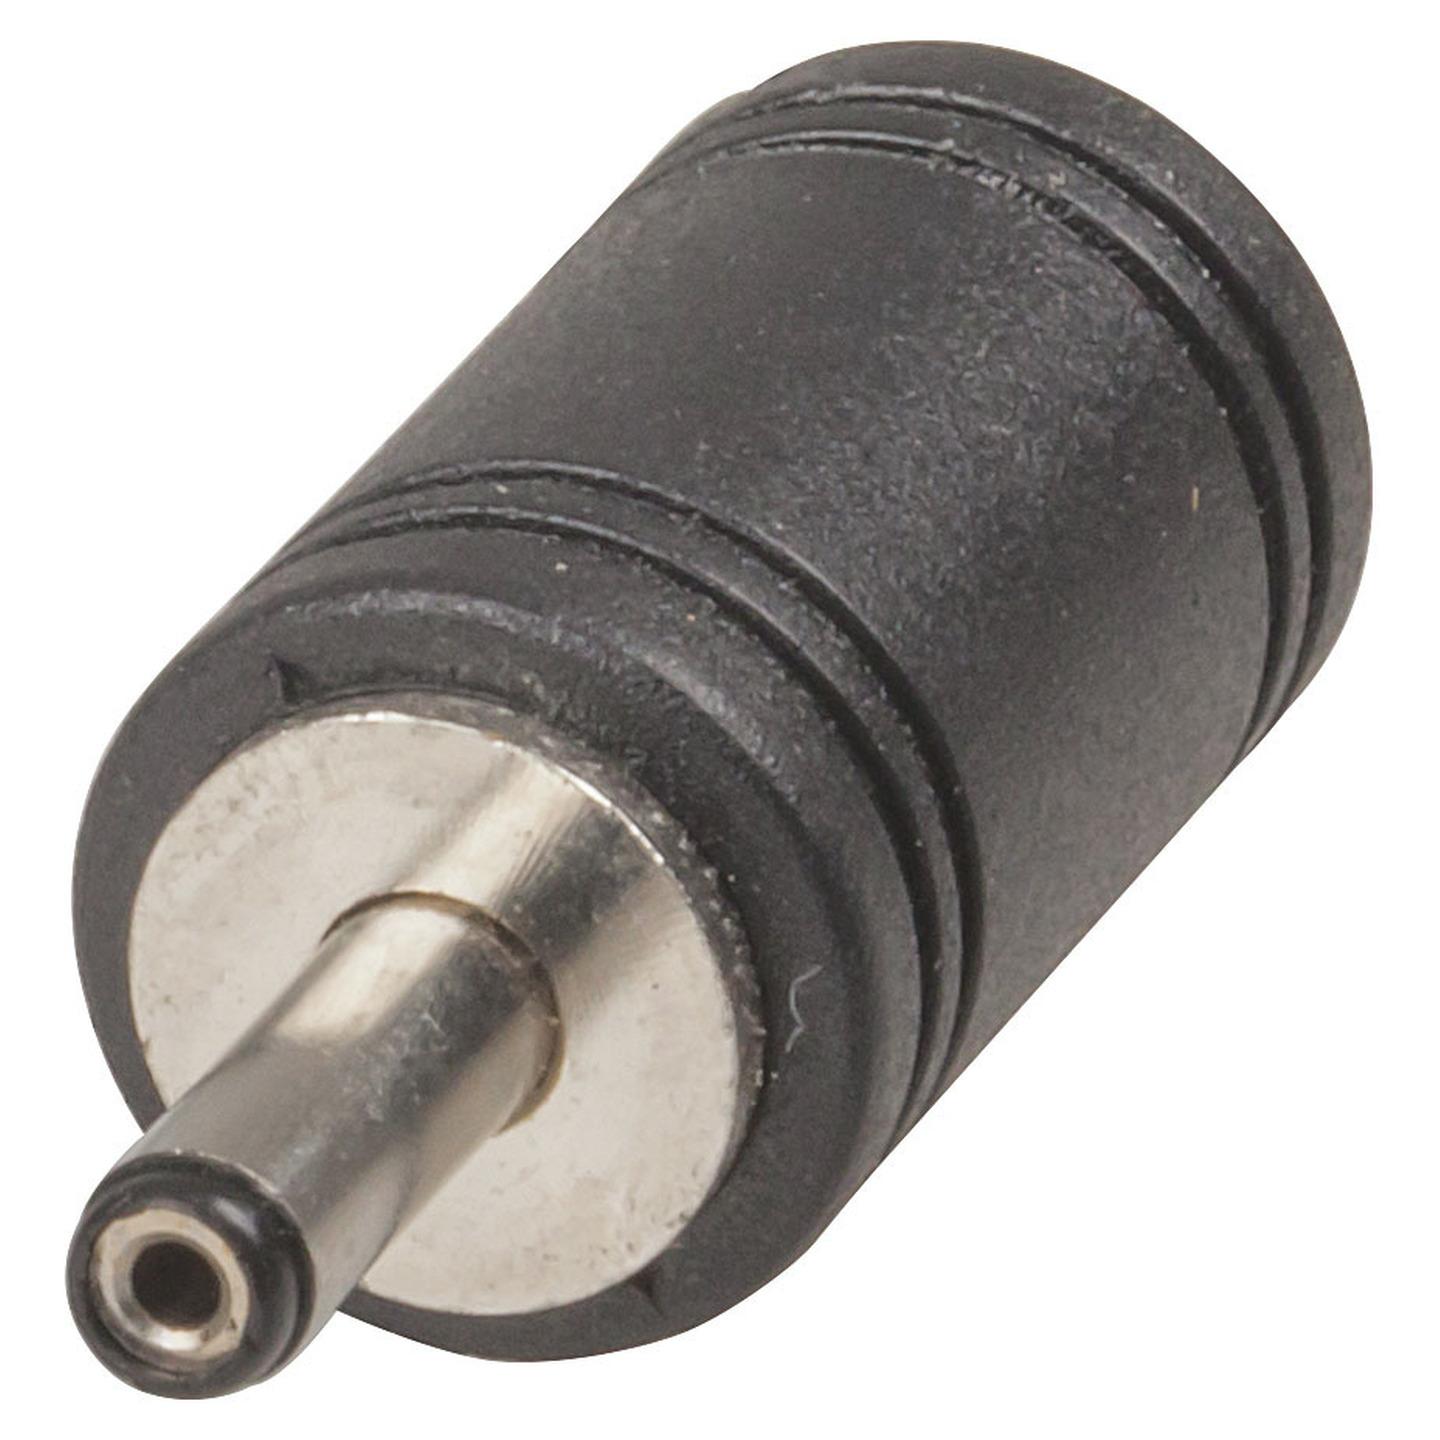 1.3mm DC Plug to 2.5mm DC Socket Power Adaptor